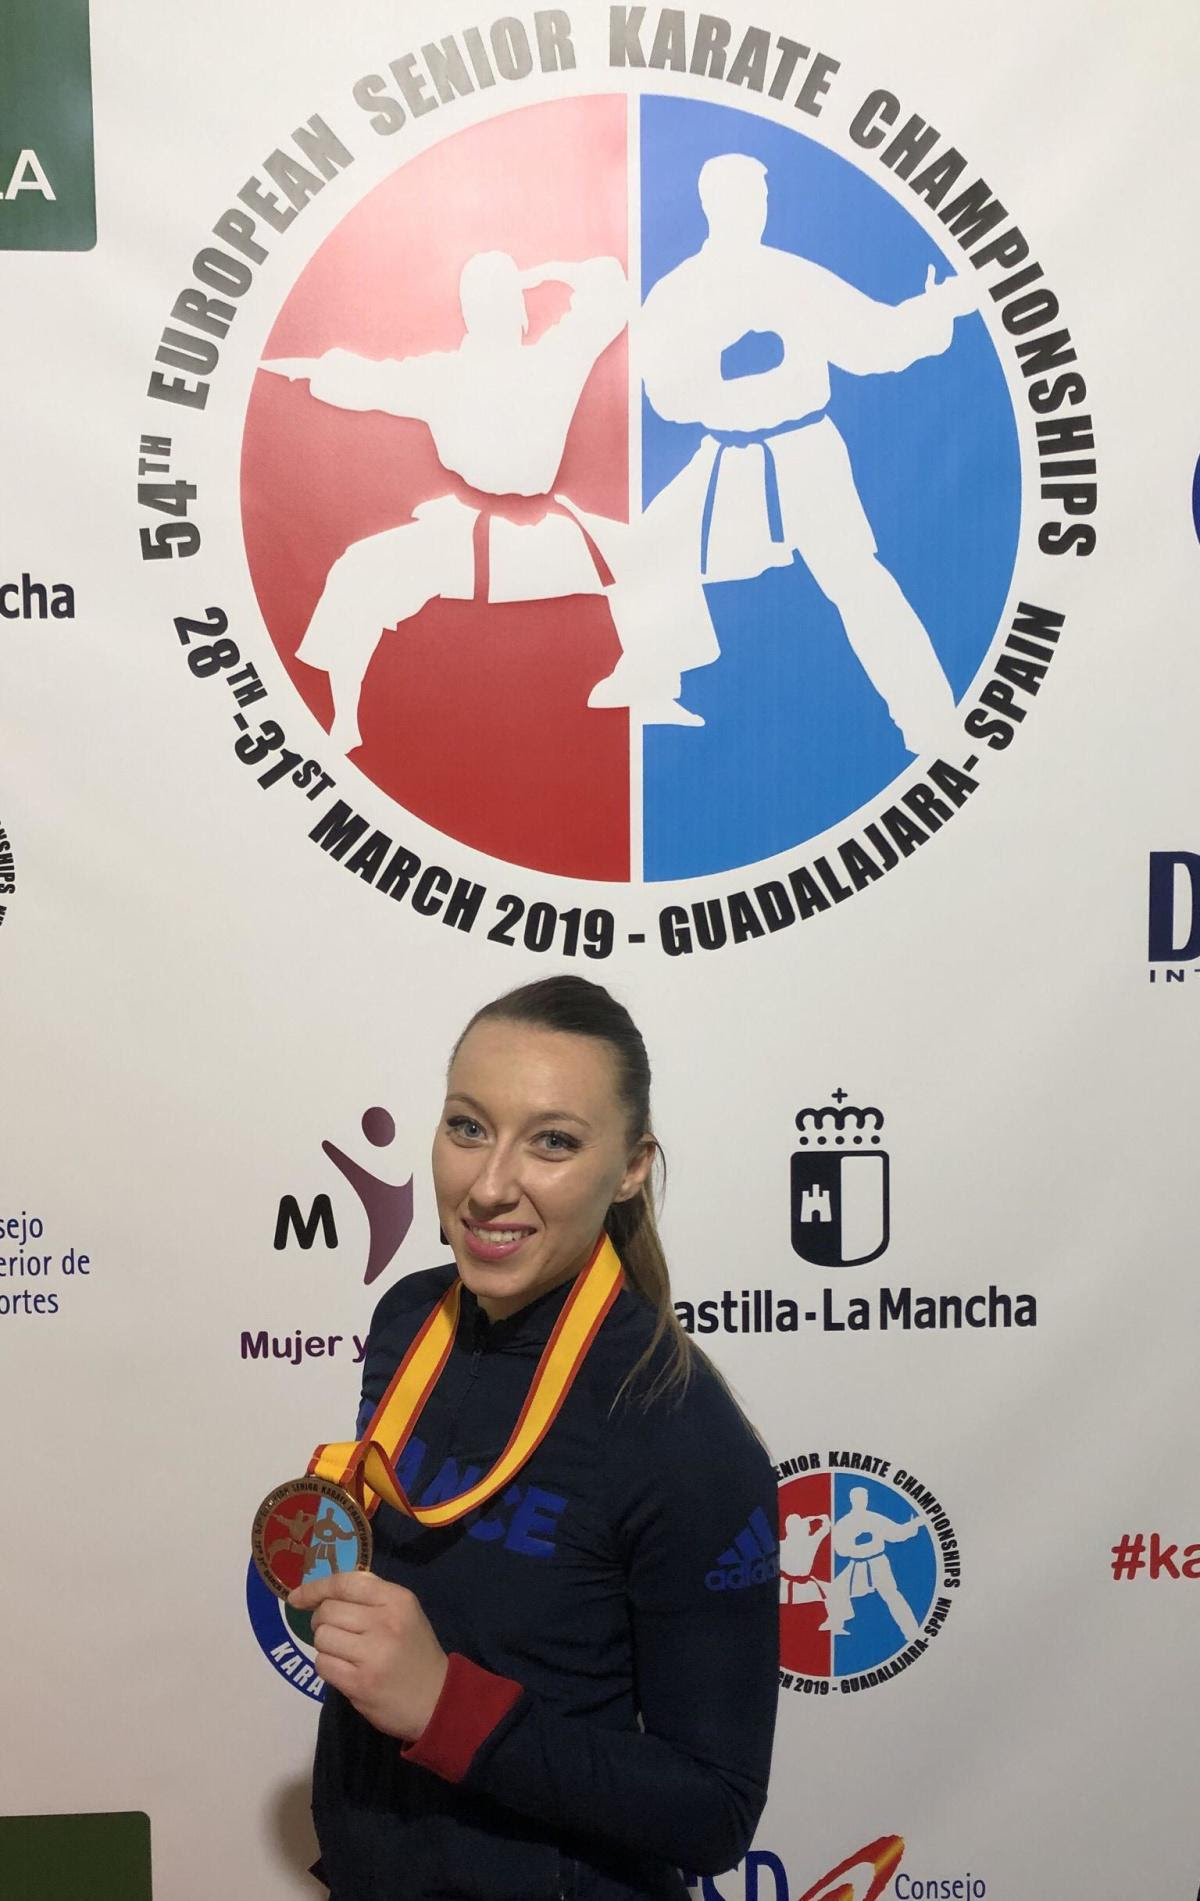 Championnats d’Europe Karaté : Alexandra Feracci en bronze